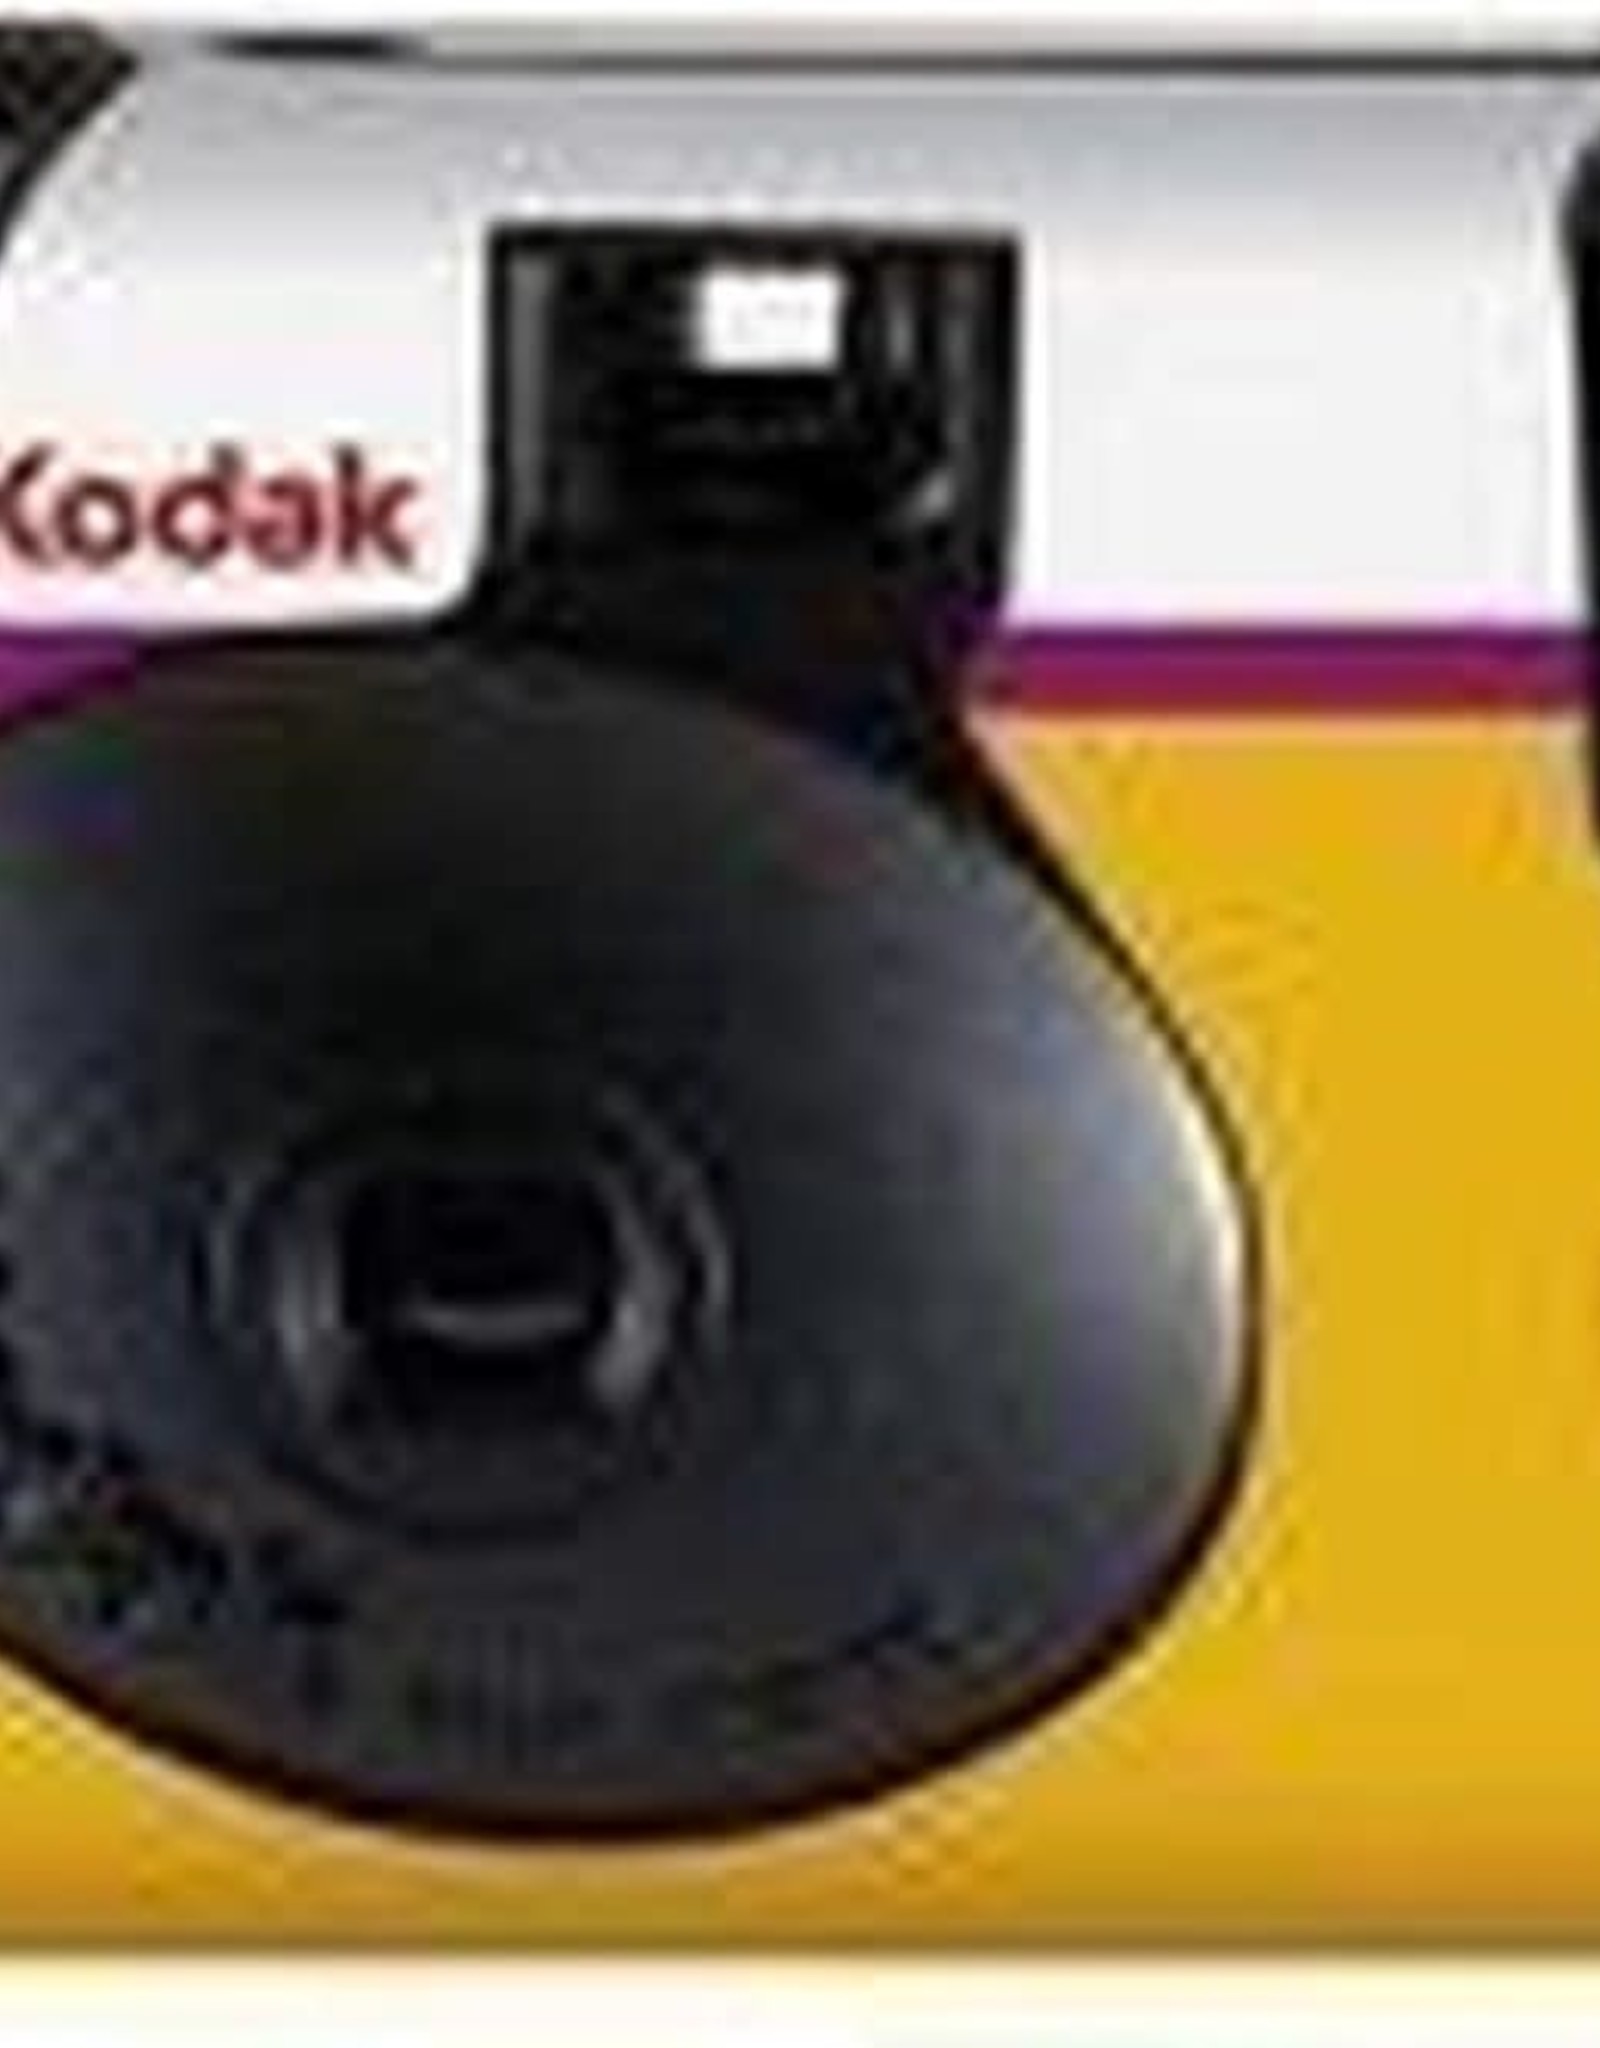 Kodak Kodak Funsaver & Sport Single Use Cameras